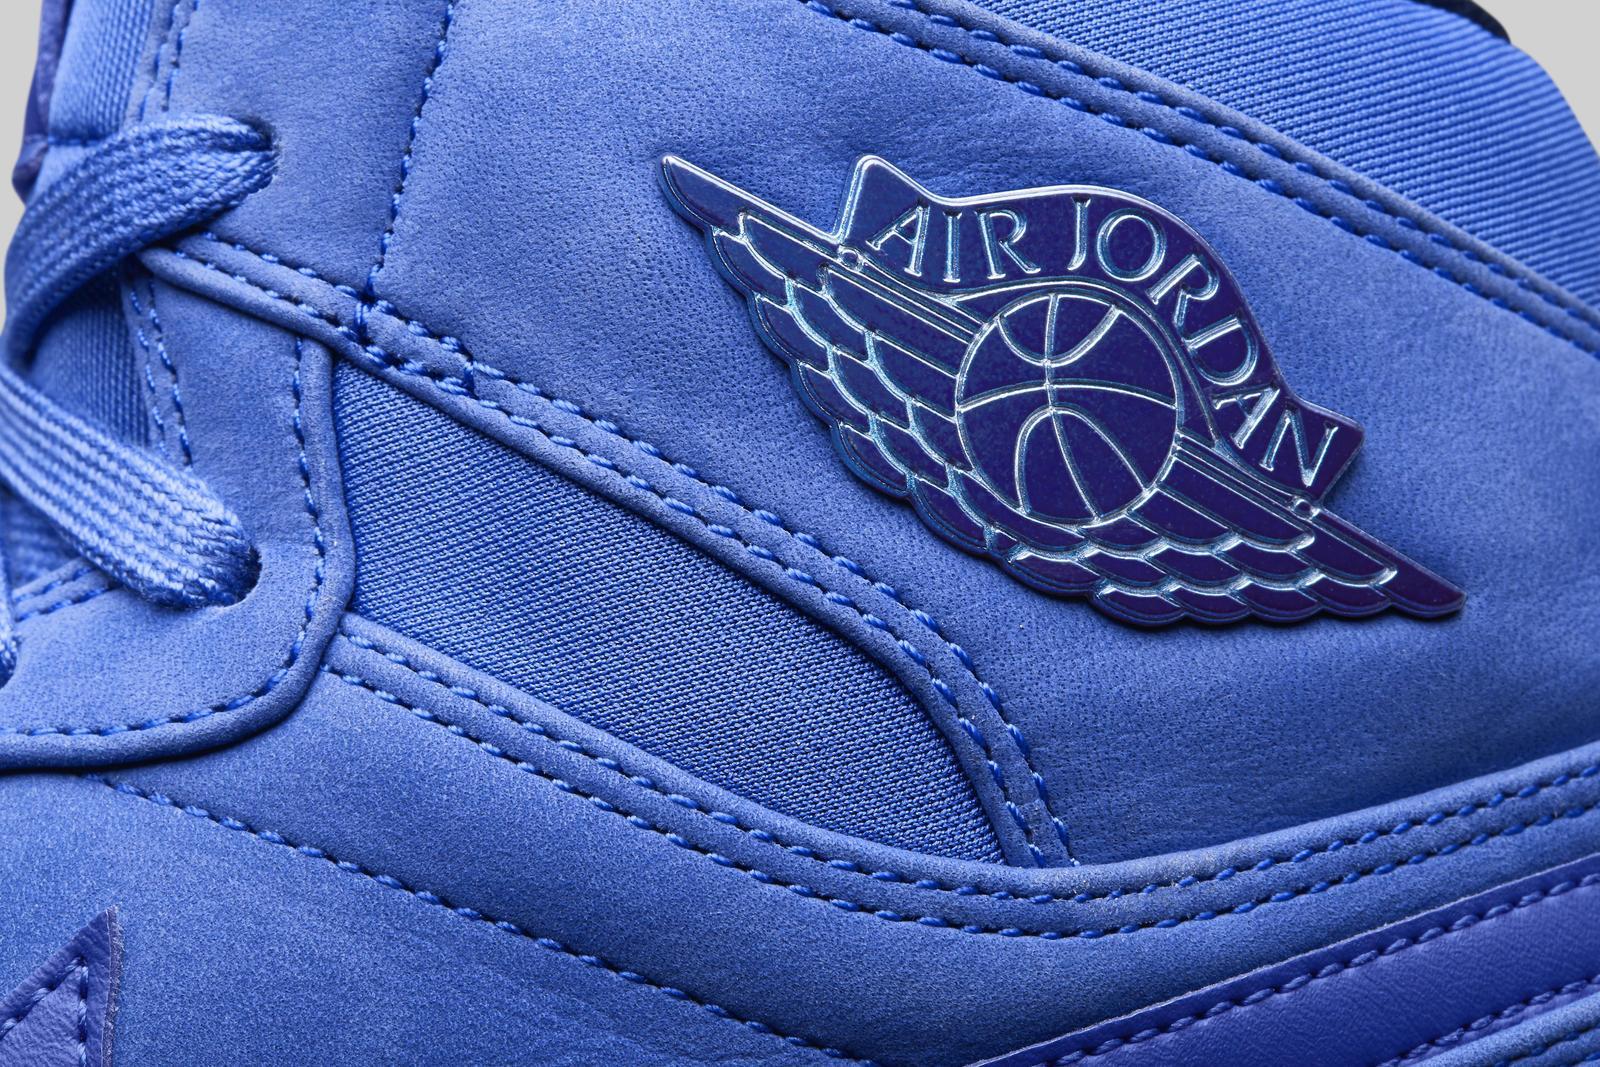 Jordan 1 Logo - Air Jordan 1 racer blue wings logo - WearTesters